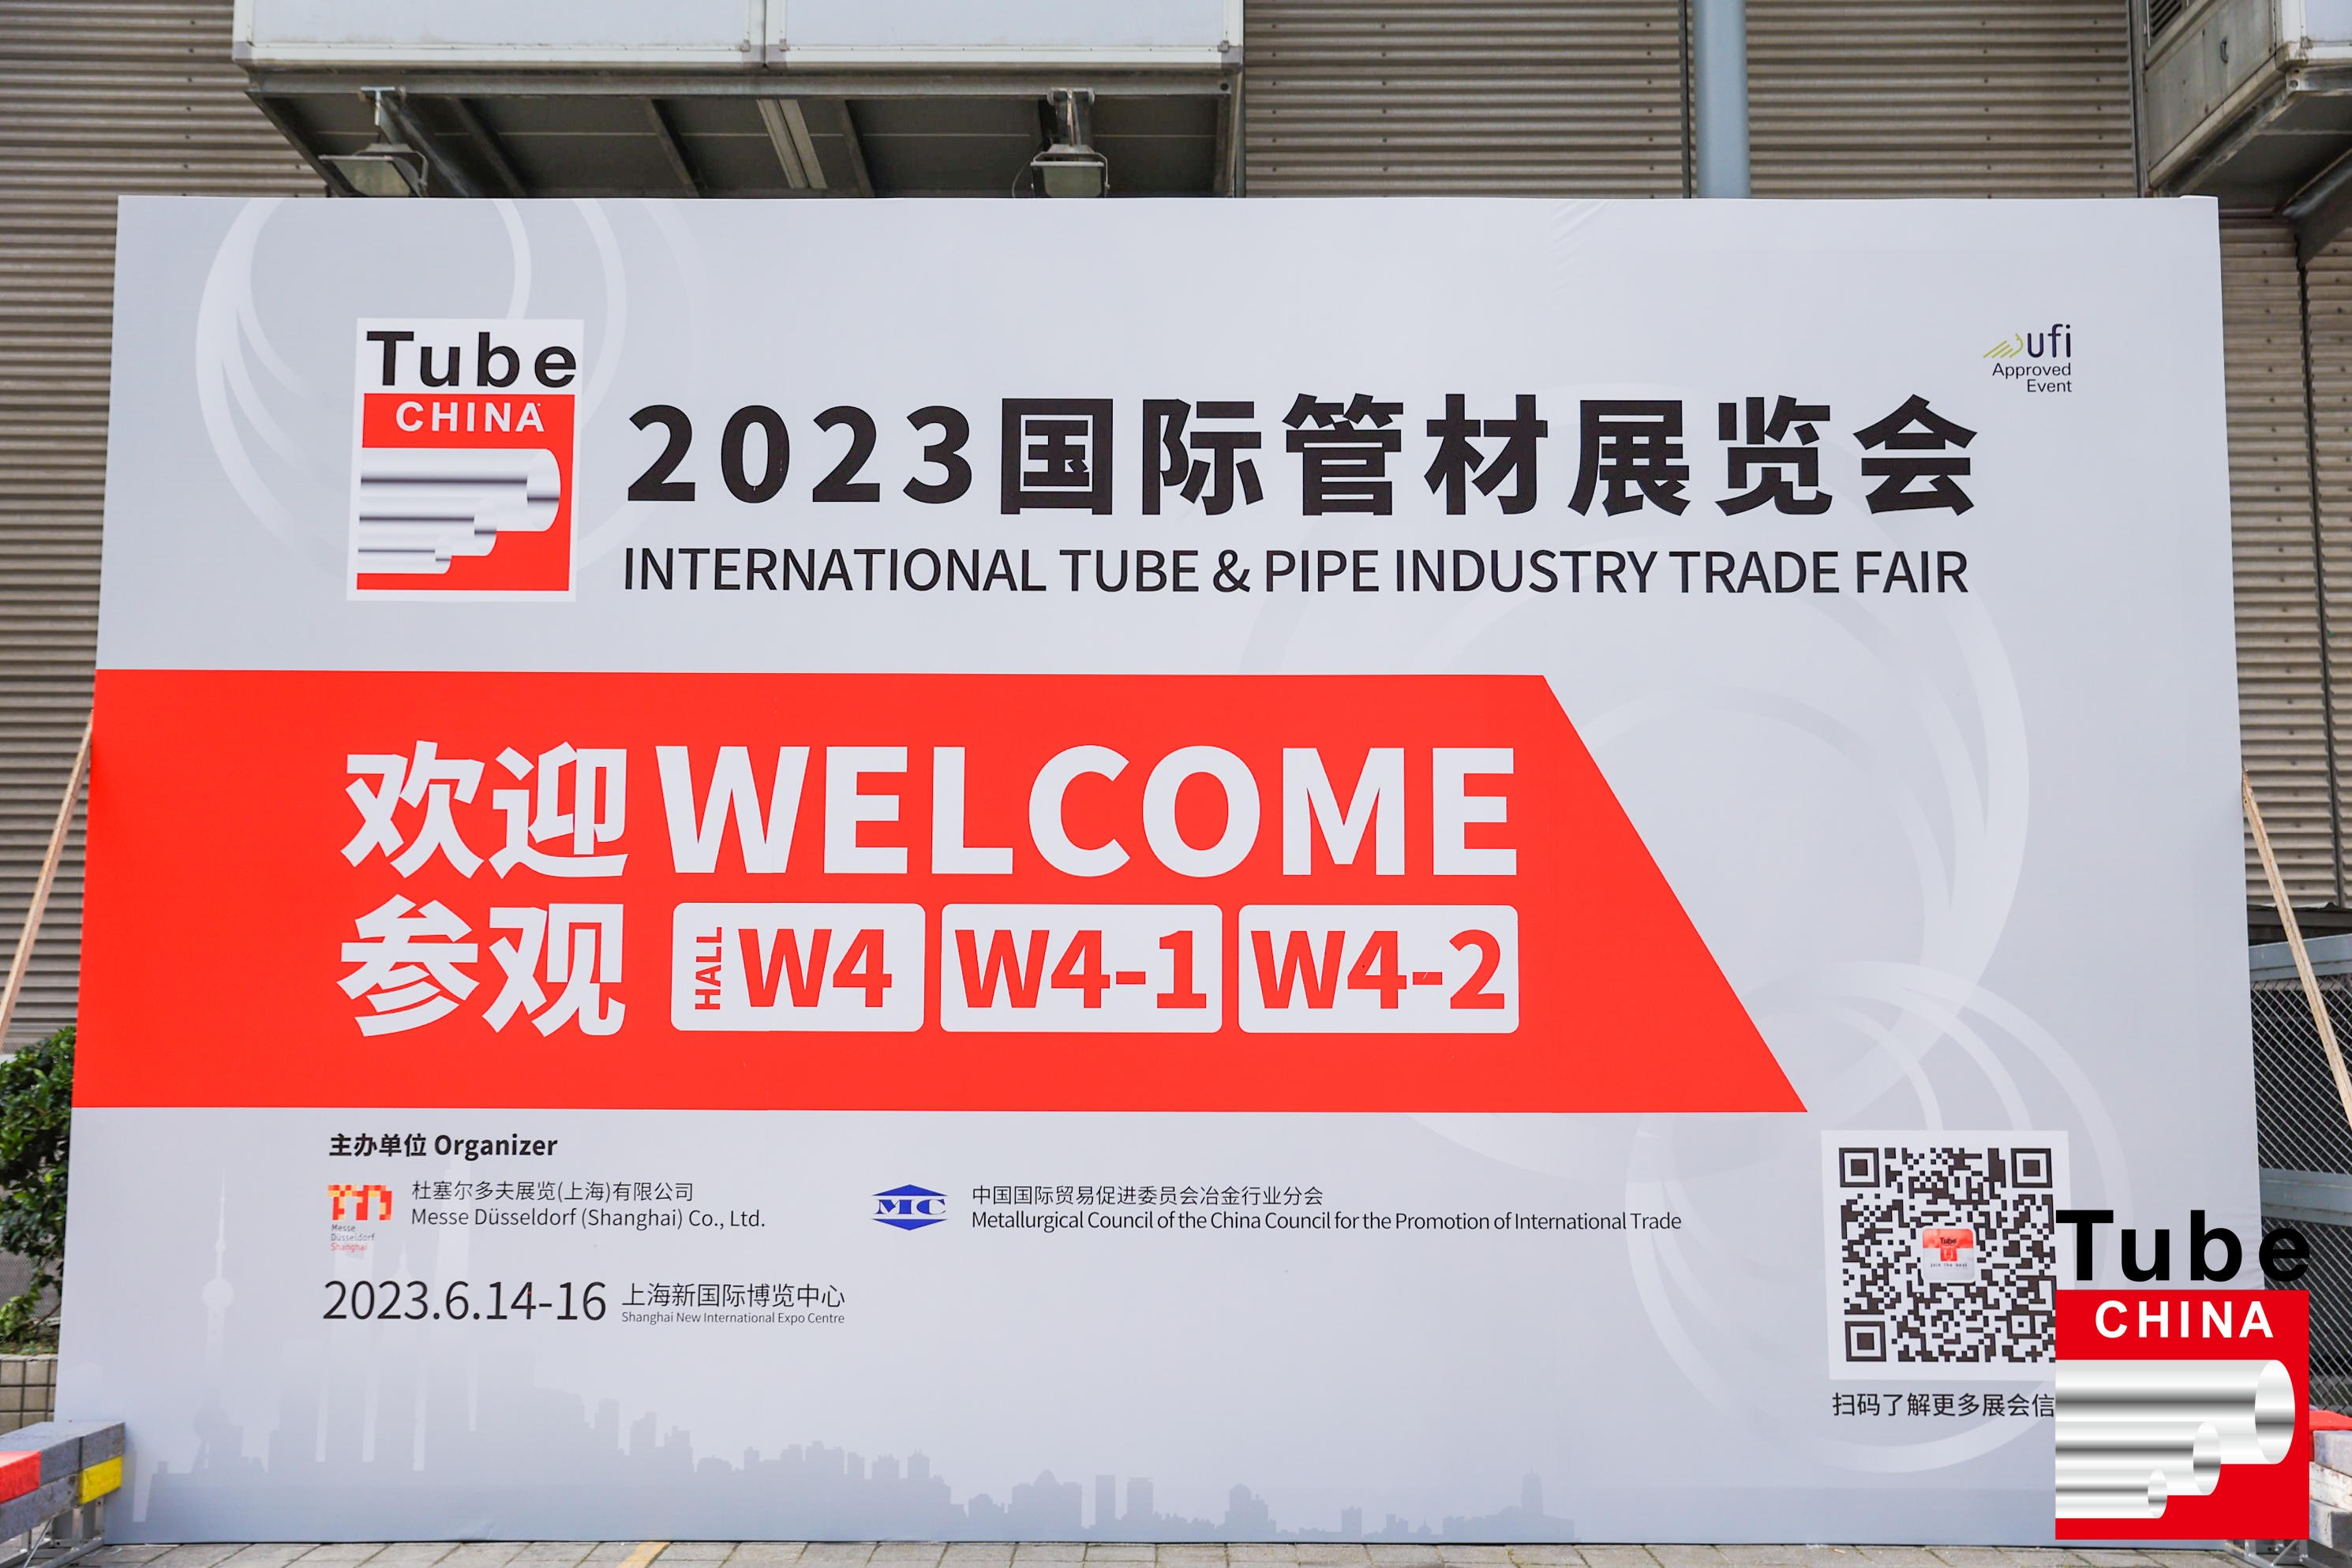 WRD ON TUBE CHINA 2023 IN SHANGHAI